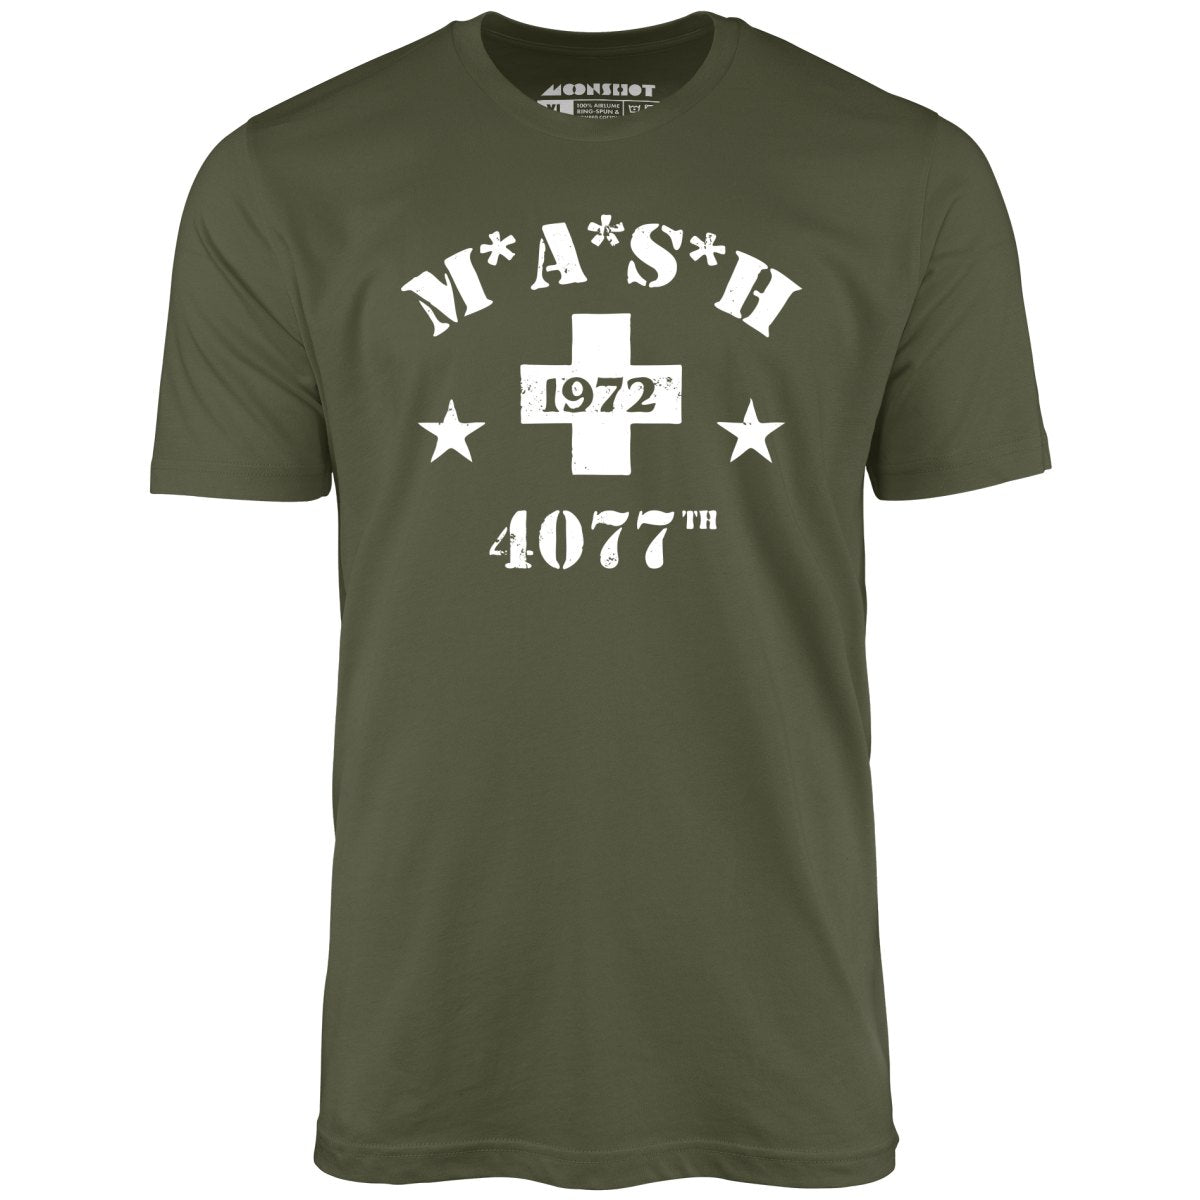 Mash 4077th - Unisex T-Shirt